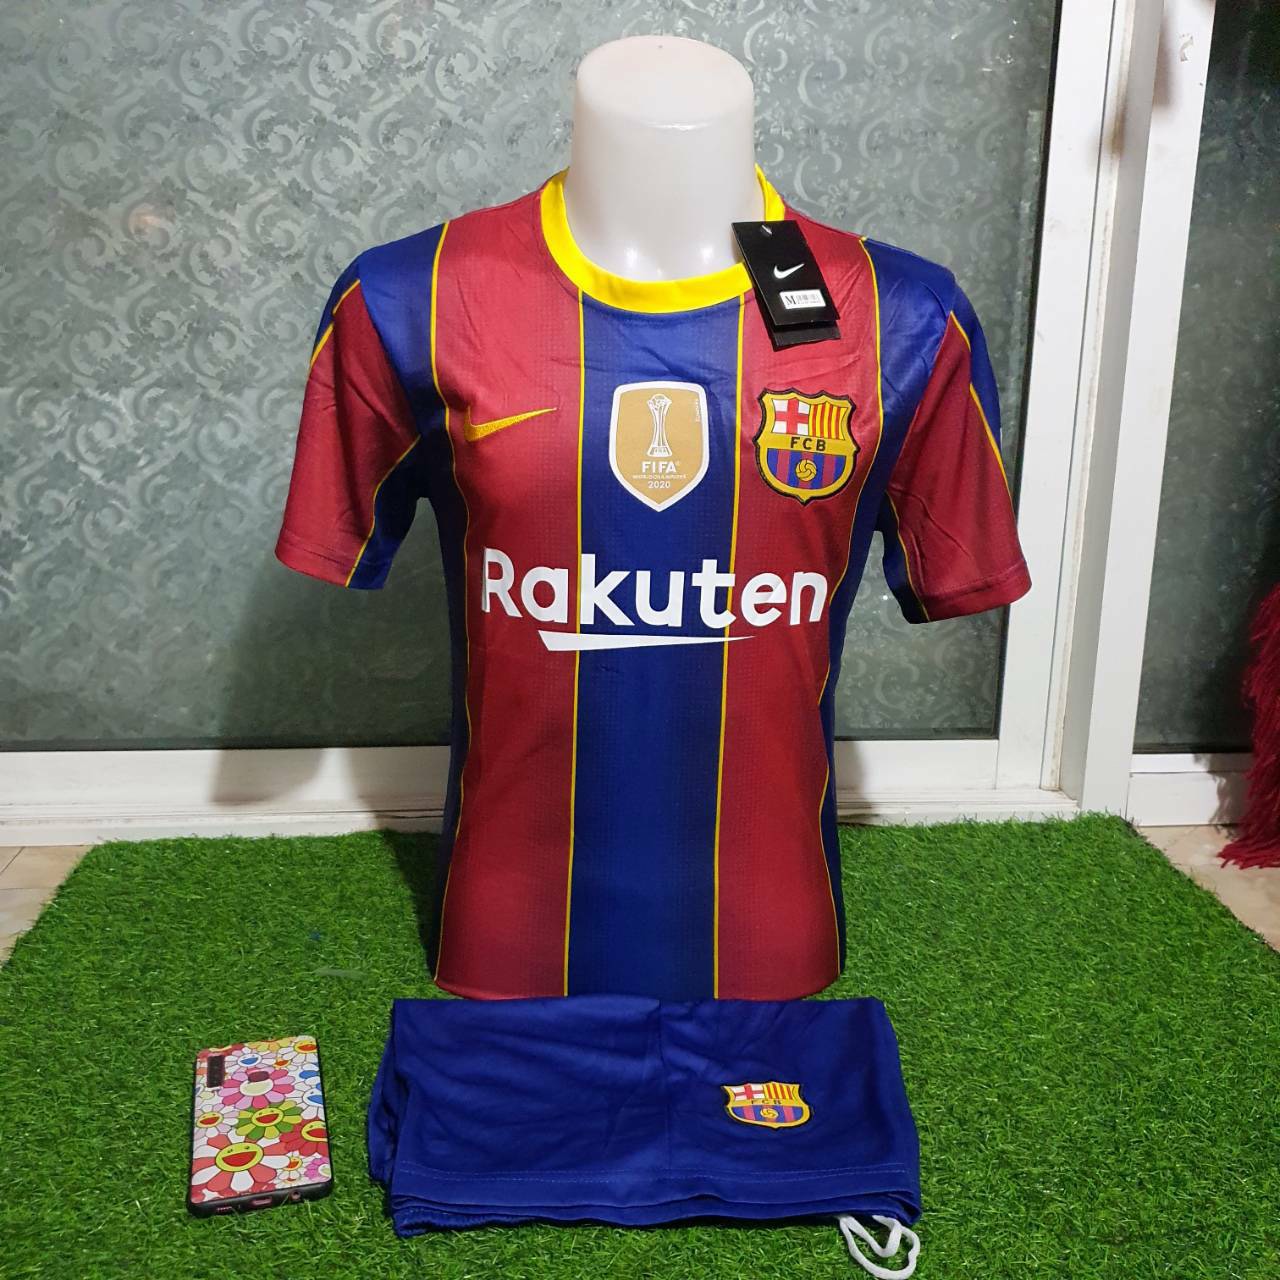 Annshopชุดบอล ทีมบาร์เซโลน่า บาร์ซา Barça, ชุดสโมสร ลายใหม่ล่าสุด ถูกที่สุด  ได้ทั้งเสื้อและกาง